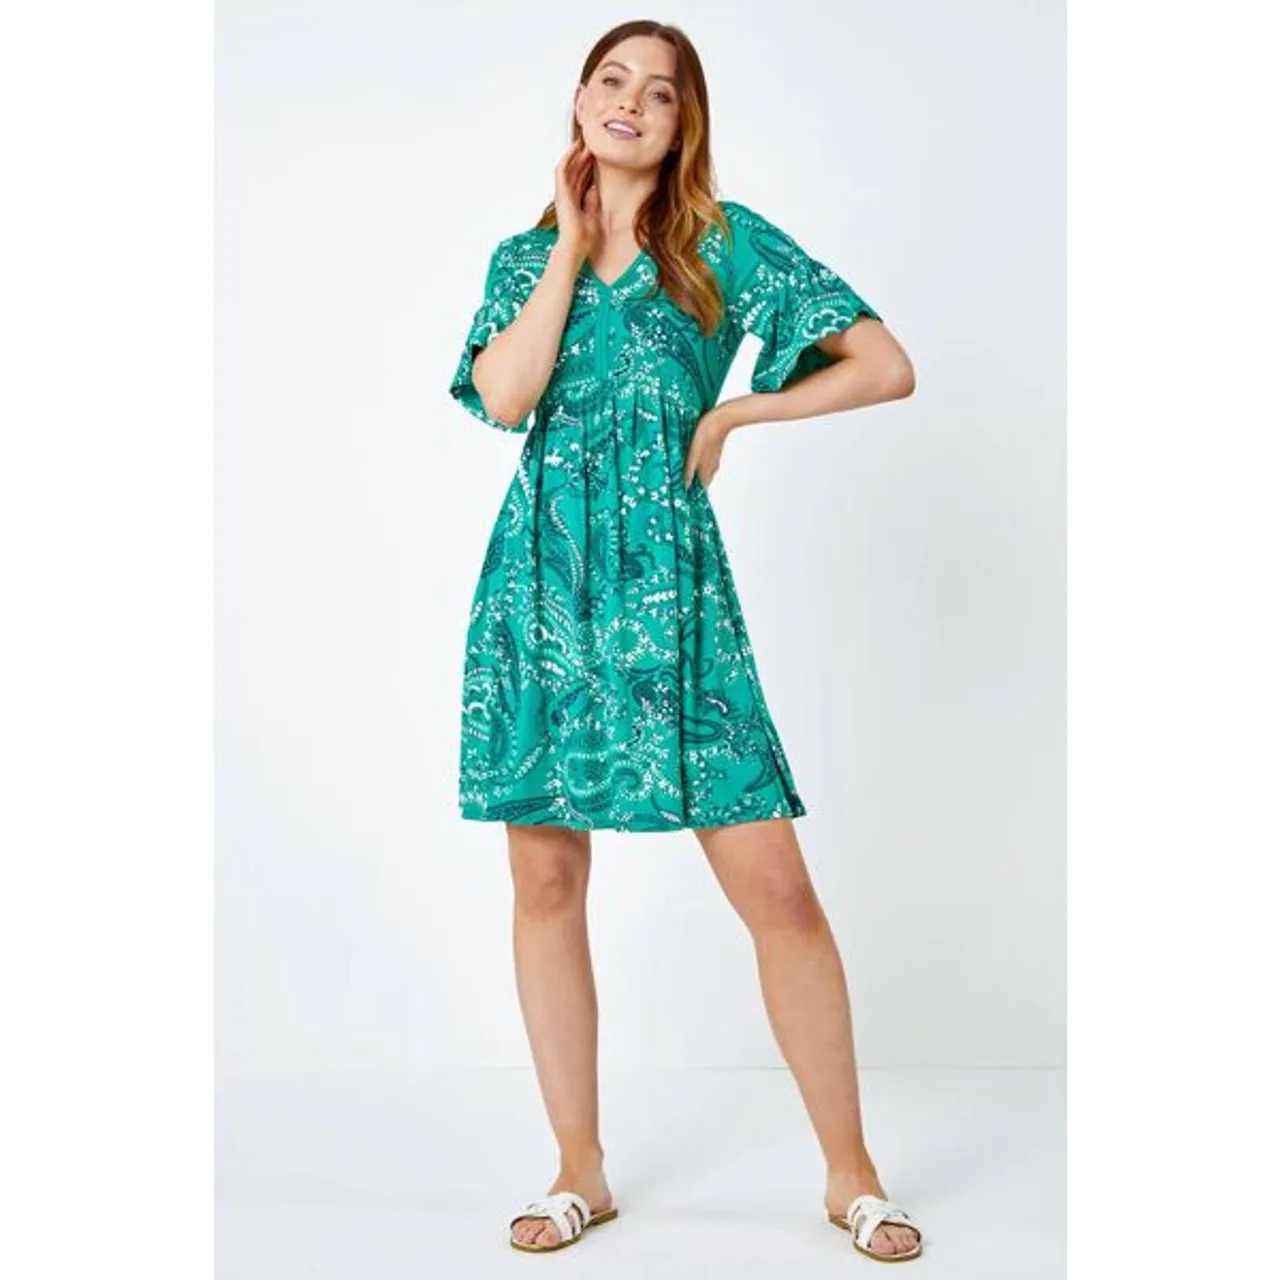 Roman Paisley Print Frill Sleeve Dress in Green - Size 12 12 female